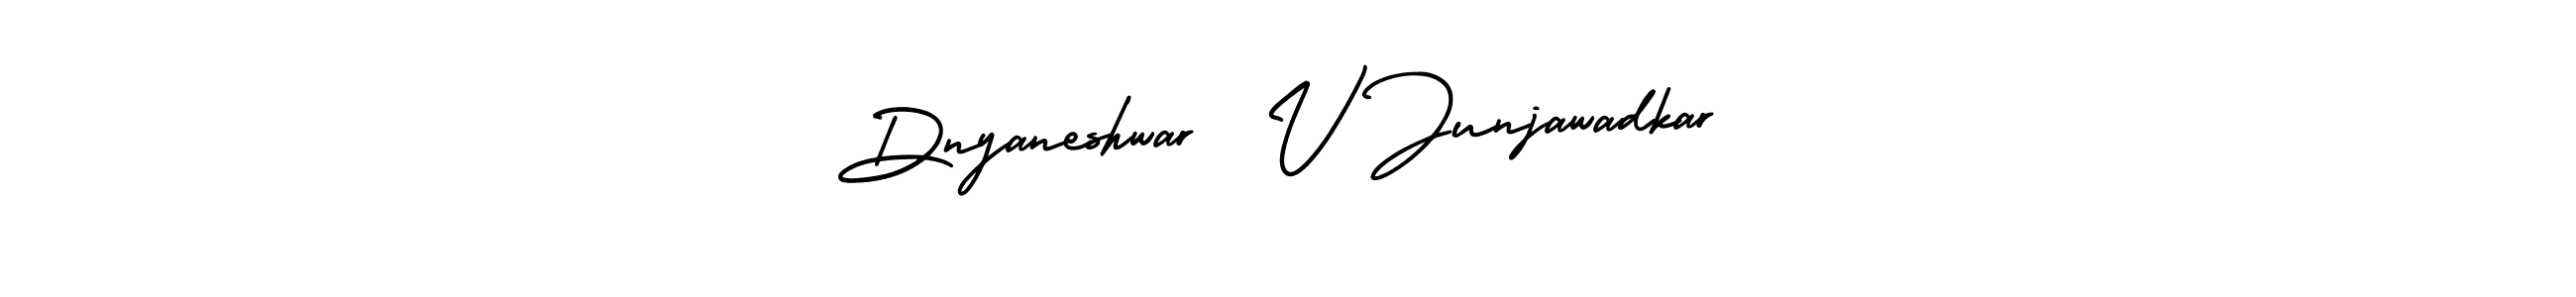 How to make Dnyaneshwar  V Junjawadkar signature? AmerikaSignatureDemo-Regular is a professional autograph style. Create handwritten signature for Dnyaneshwar  V Junjawadkar name. Dnyaneshwar  V Junjawadkar signature style 3 images and pictures png